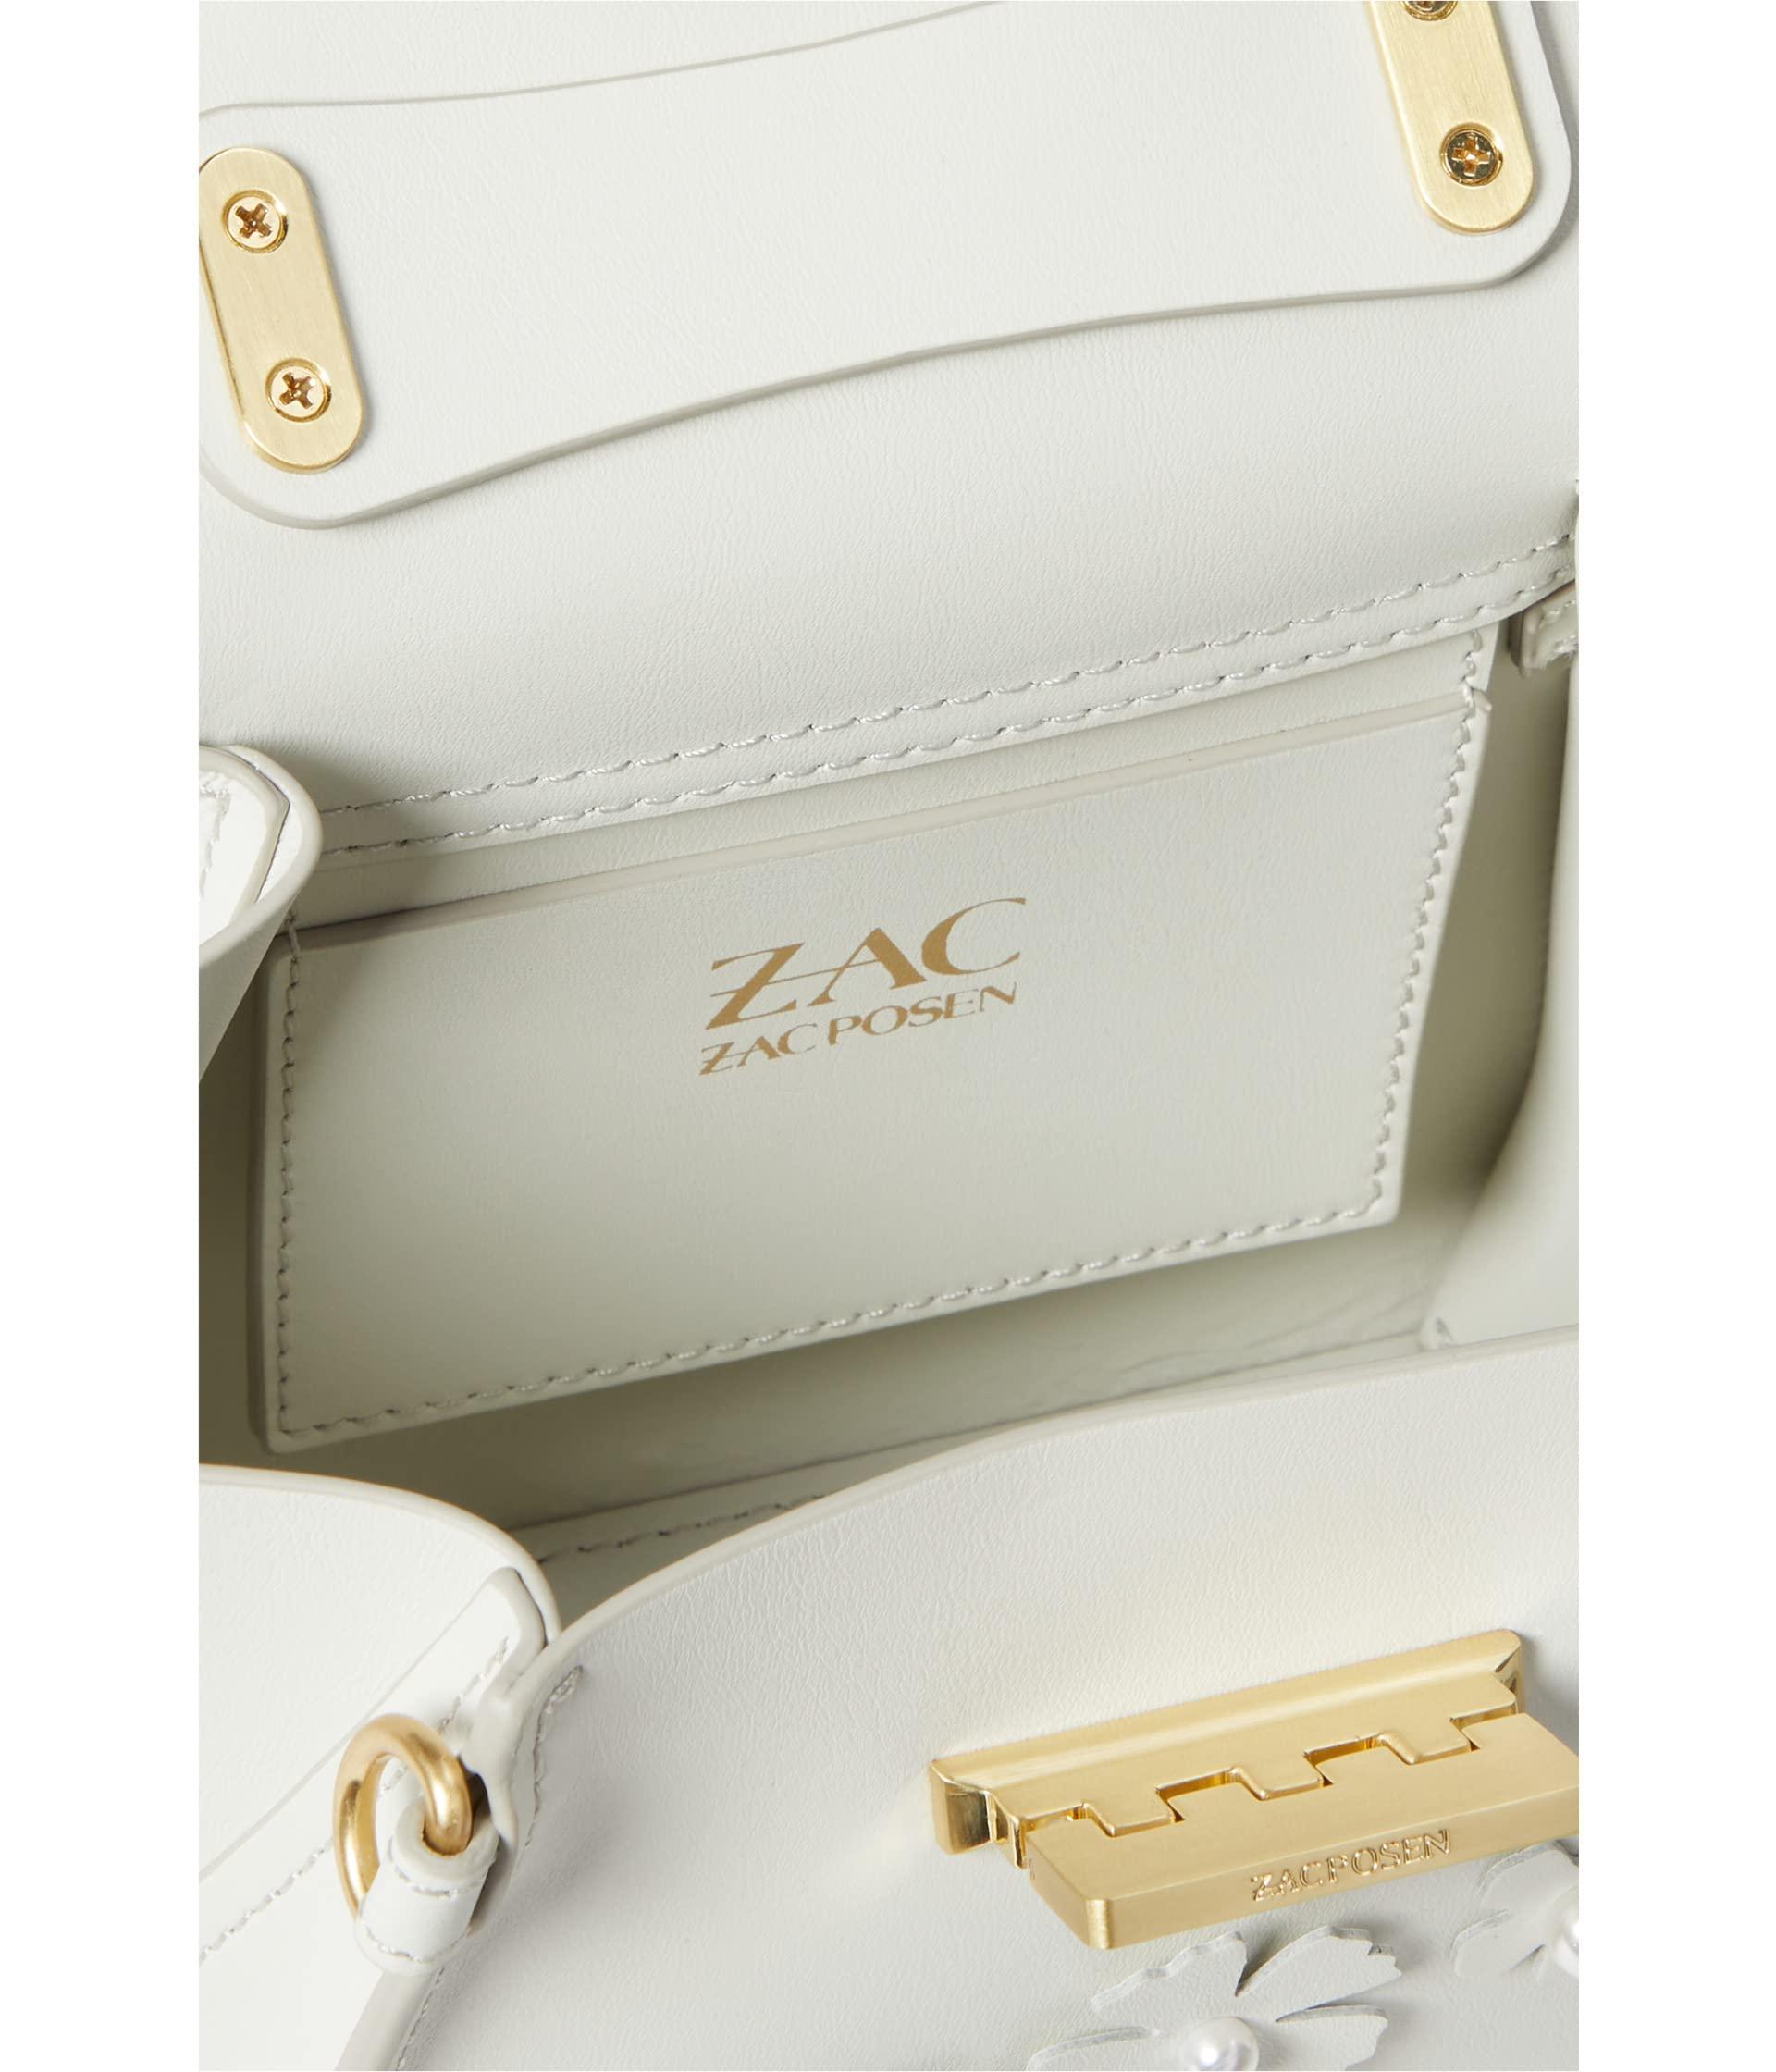 ZAC ZAC POSEN ZAC Zac Posen Eartha Iconic Top Handle Mini Bag